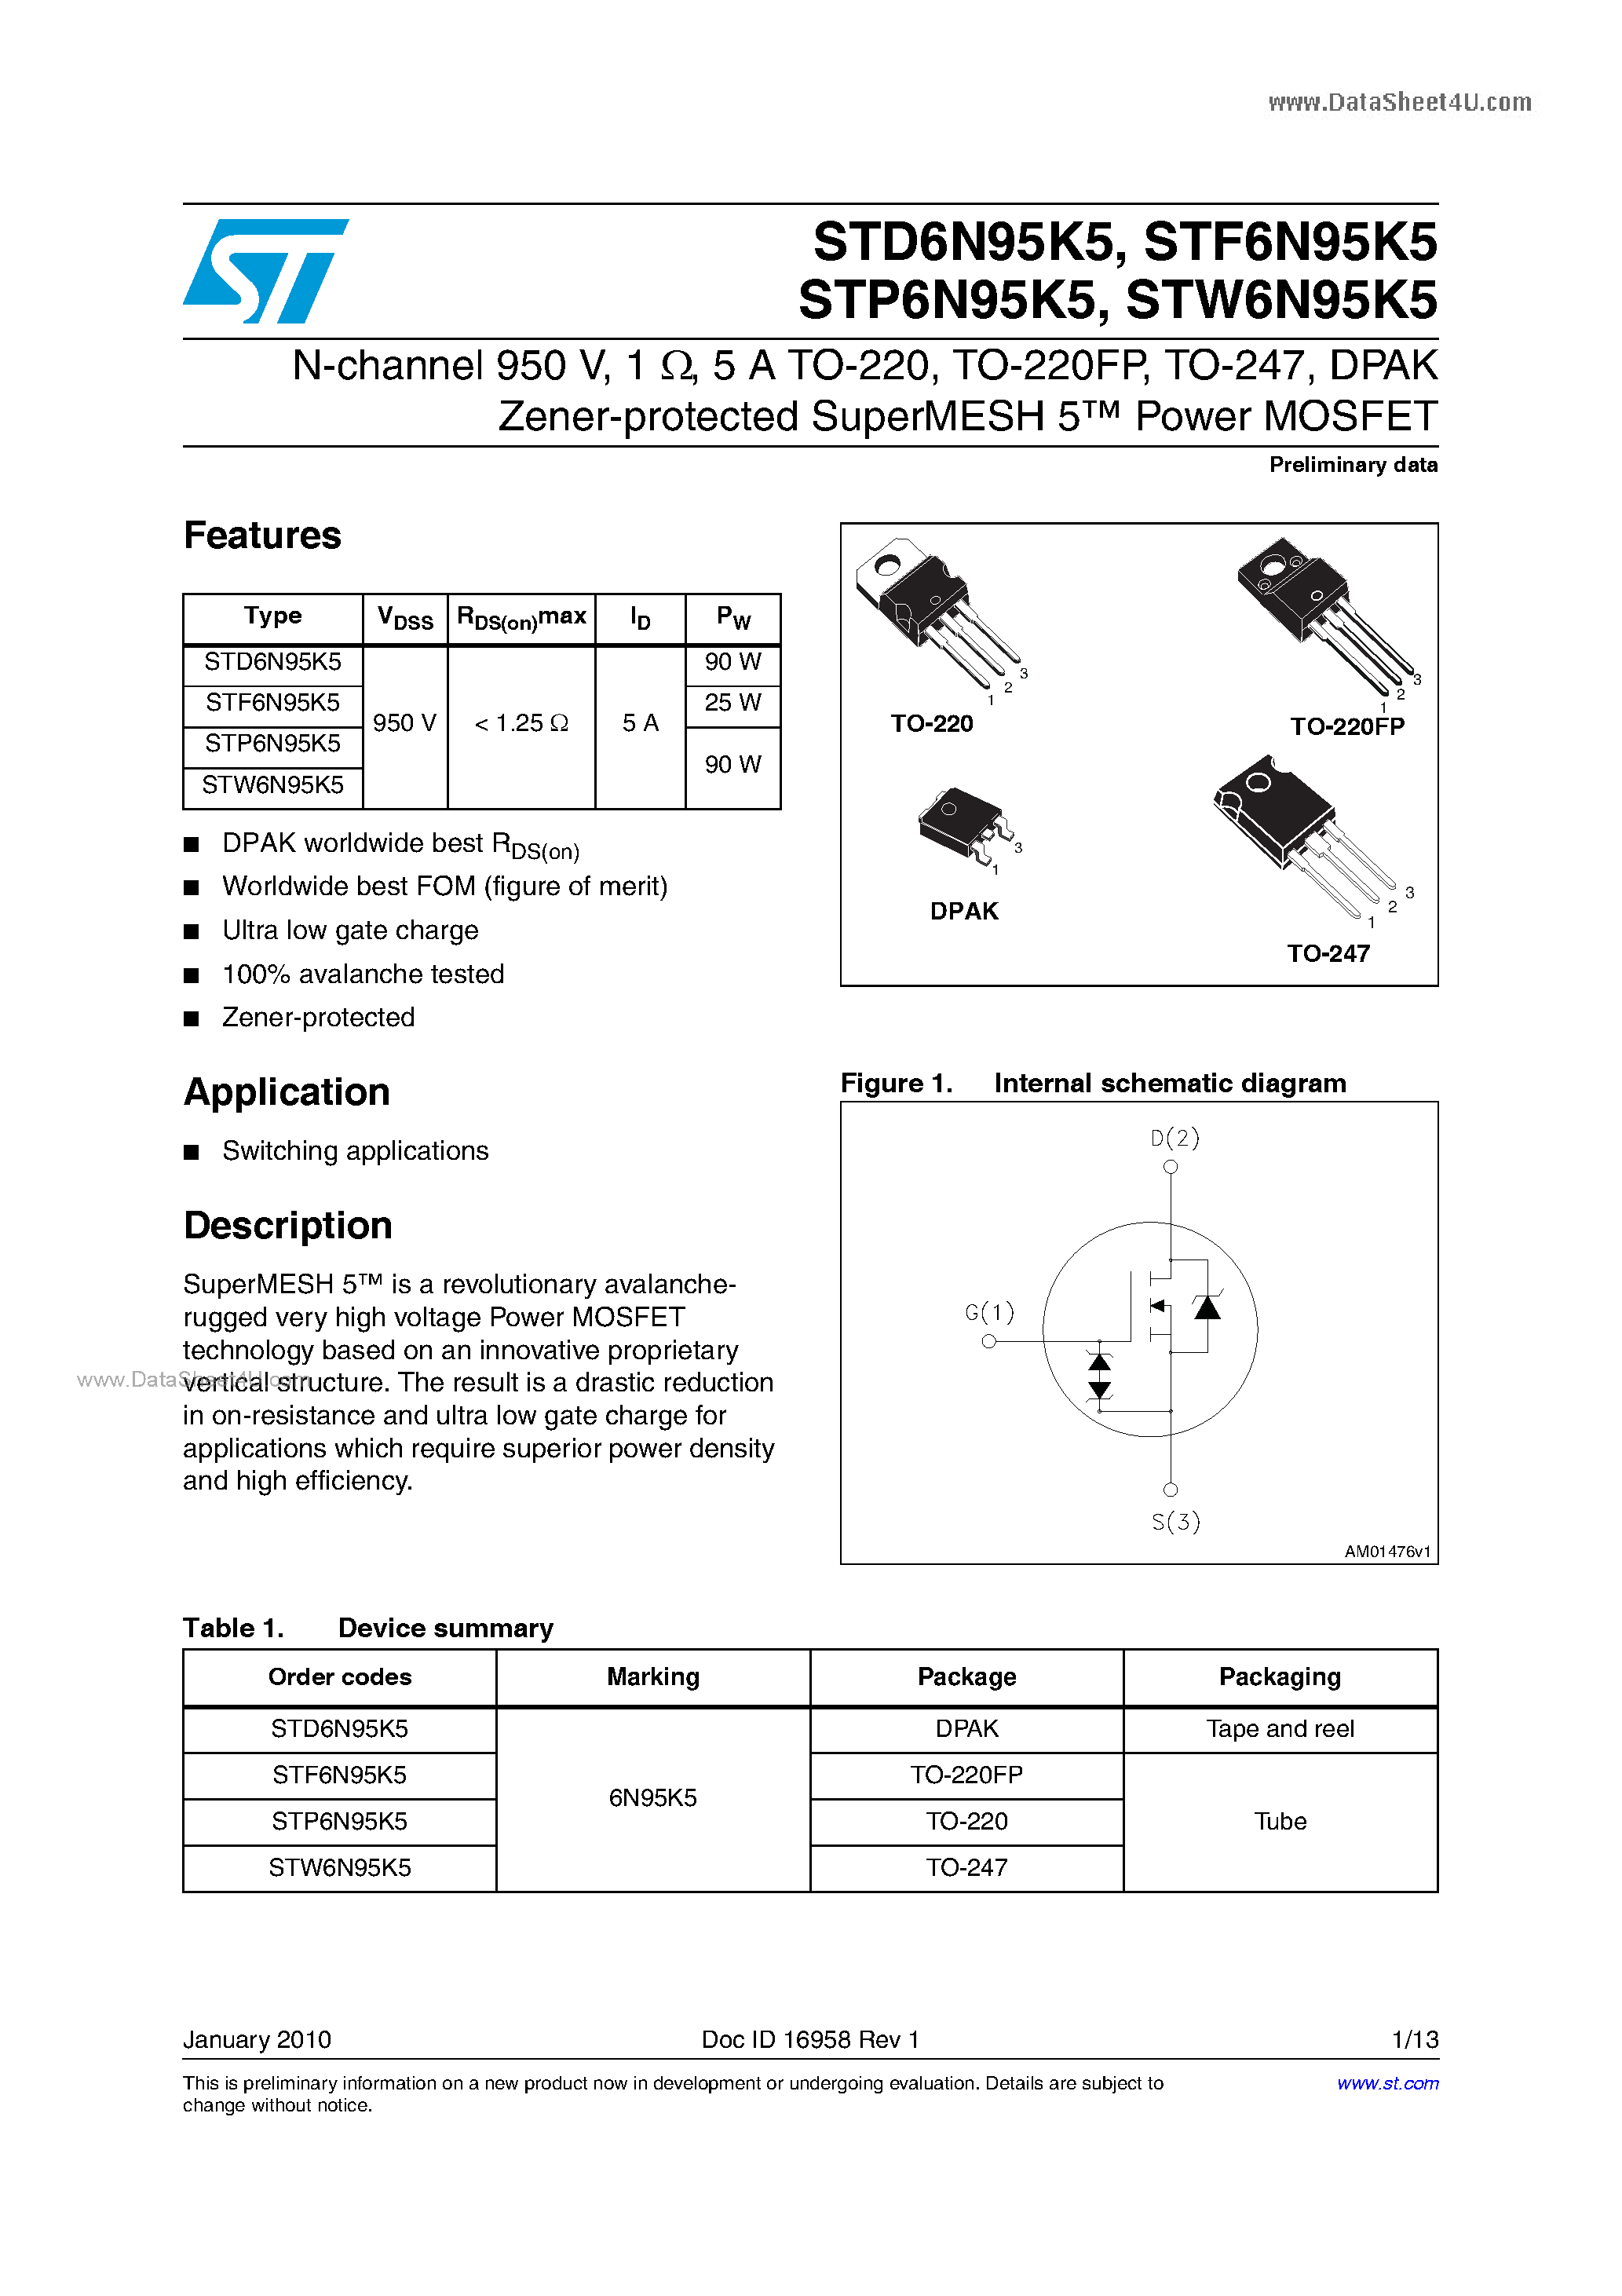 Даташит STP6N95K5 - Power MOSFETs страница 1